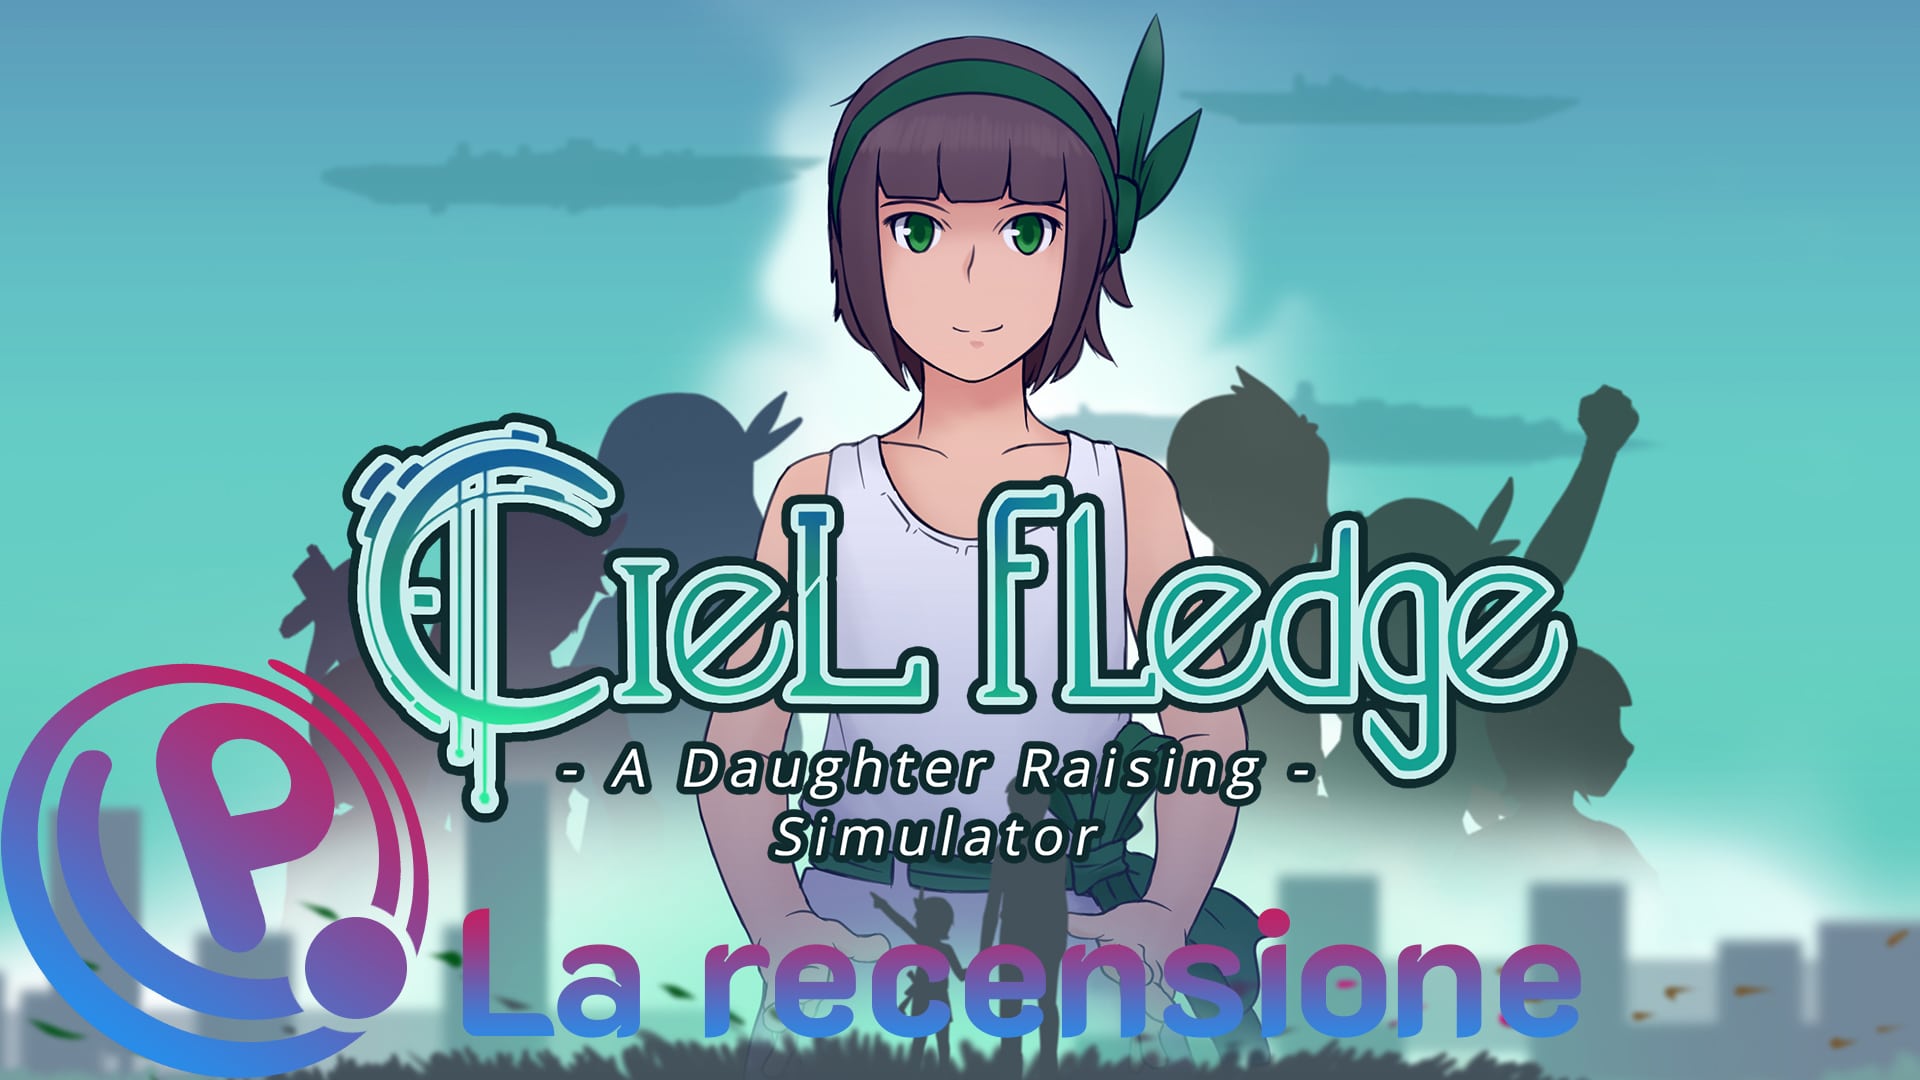 Ciel Fledge: A Daughter Raising Simulator la recensione 2